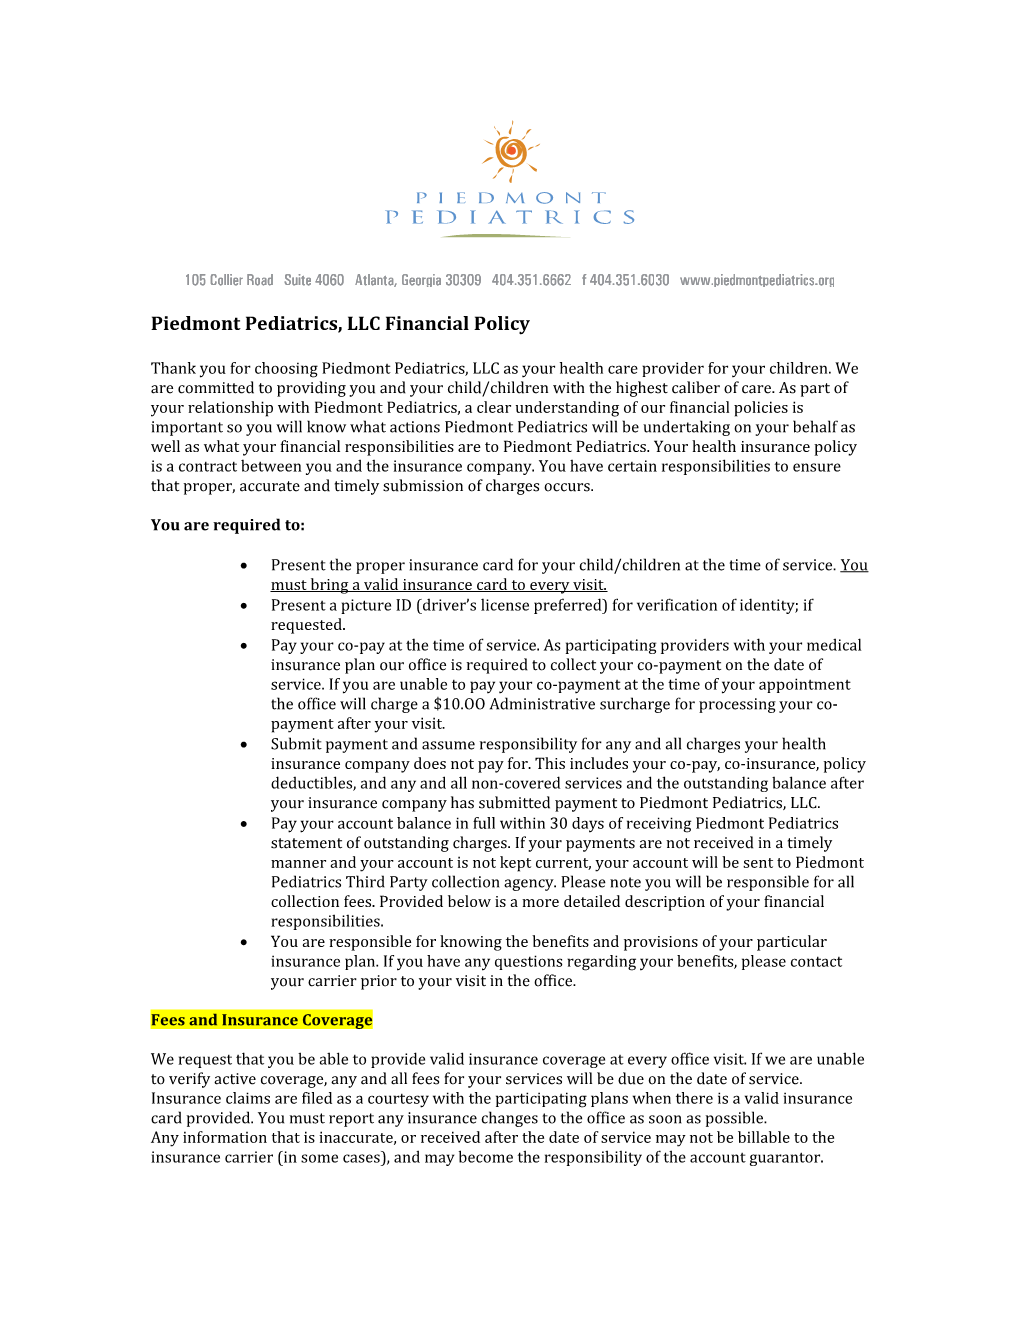 Piedmont Pediatrics, LLC Financial Policy